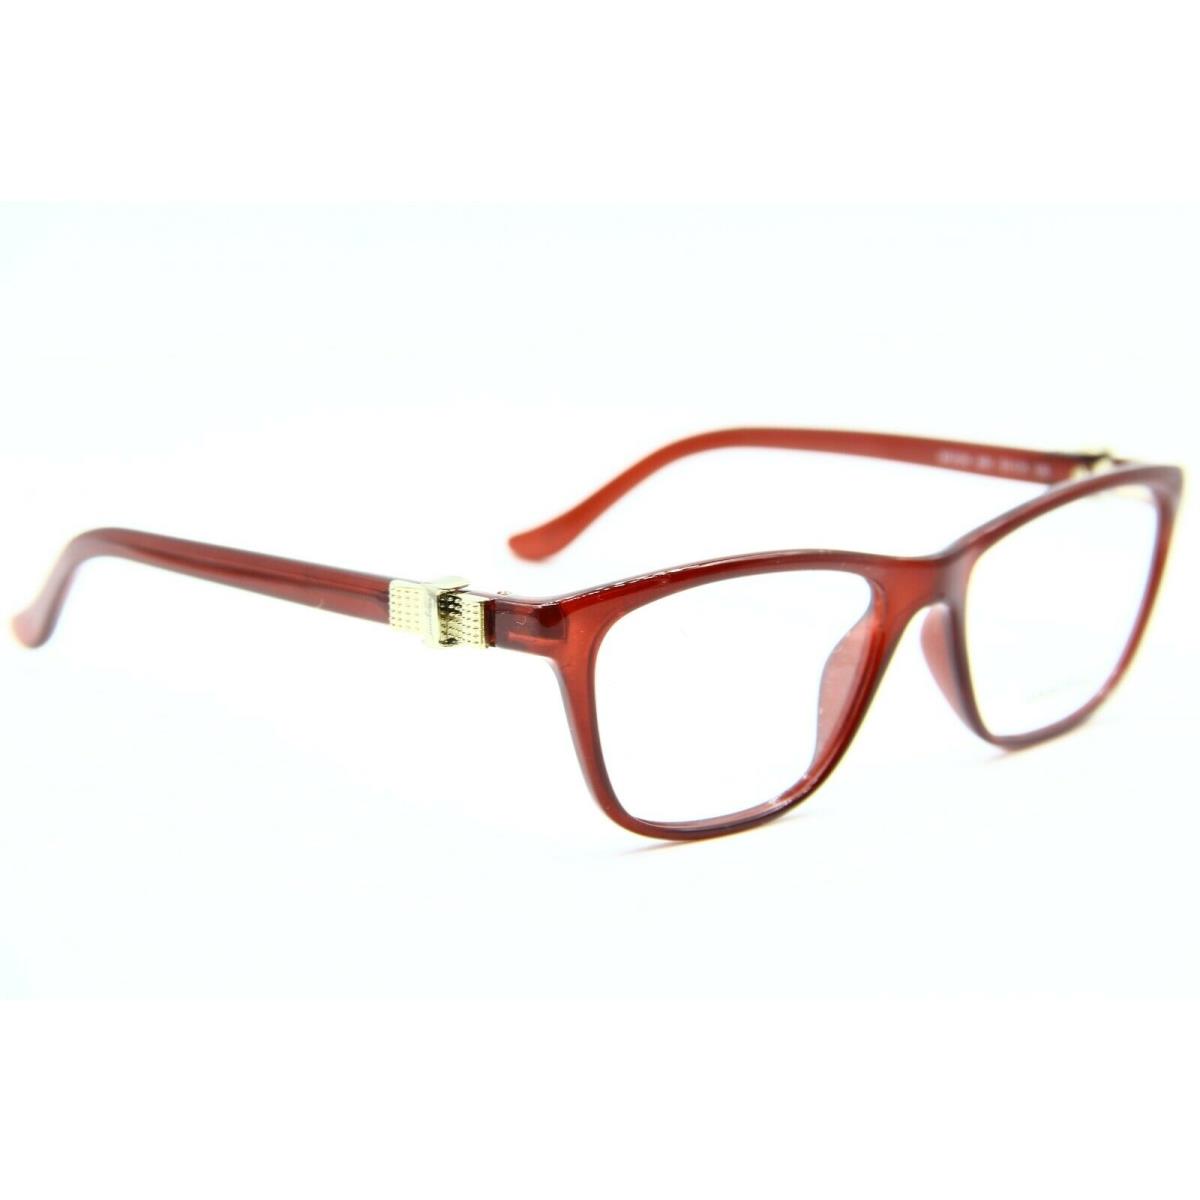 Salvatore Ferragamo eyeglasses  - VIOLET Frame